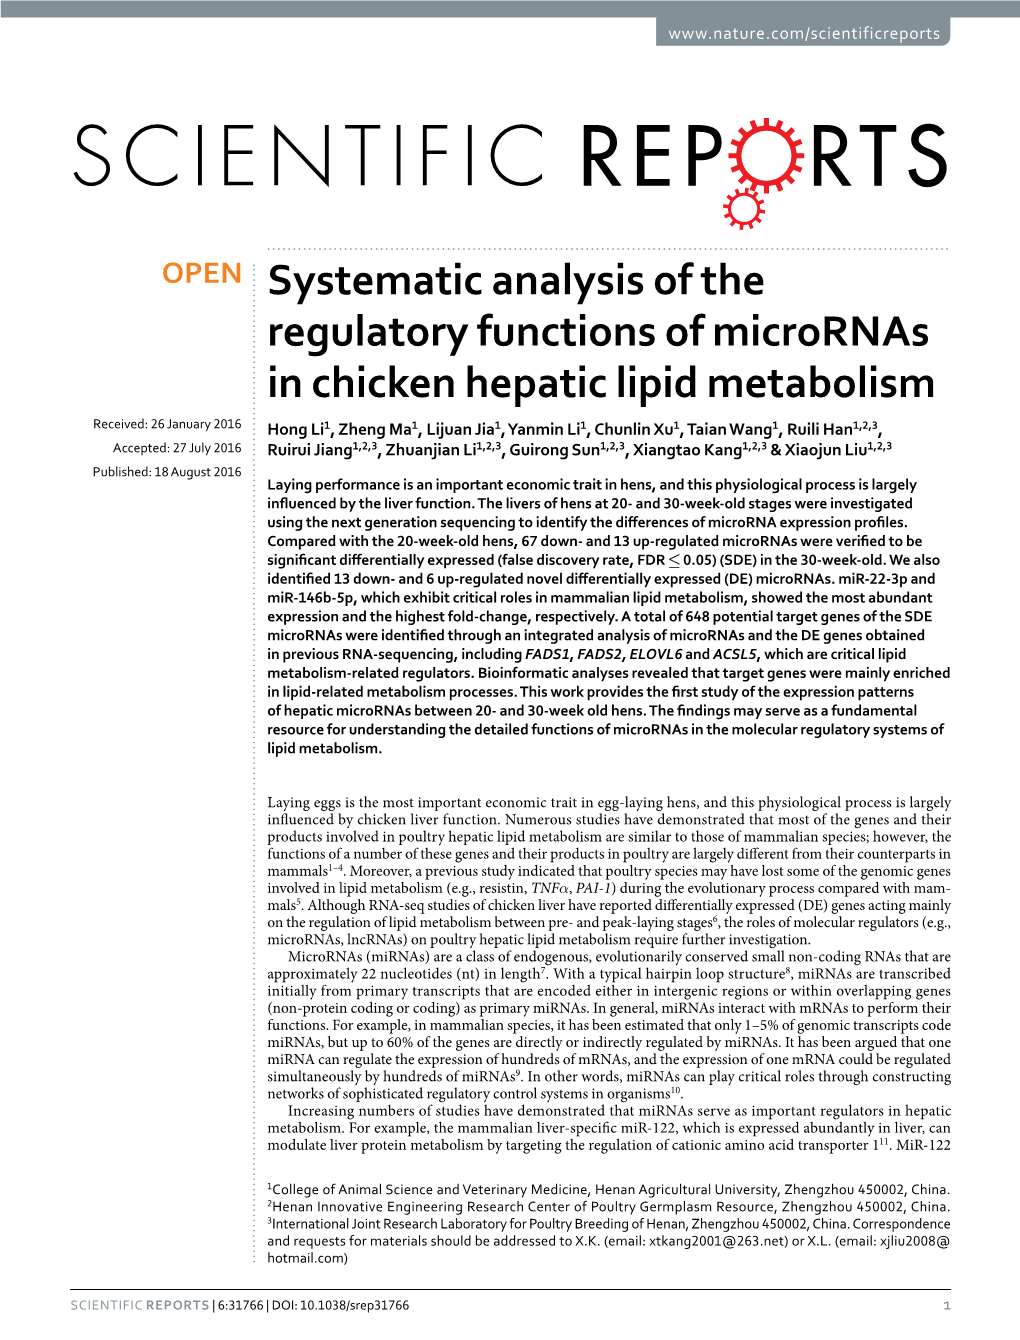 Systematic Analysis of the Regulatory Functions of Micrornas in Chicken Hepatic Lipid Metabolism